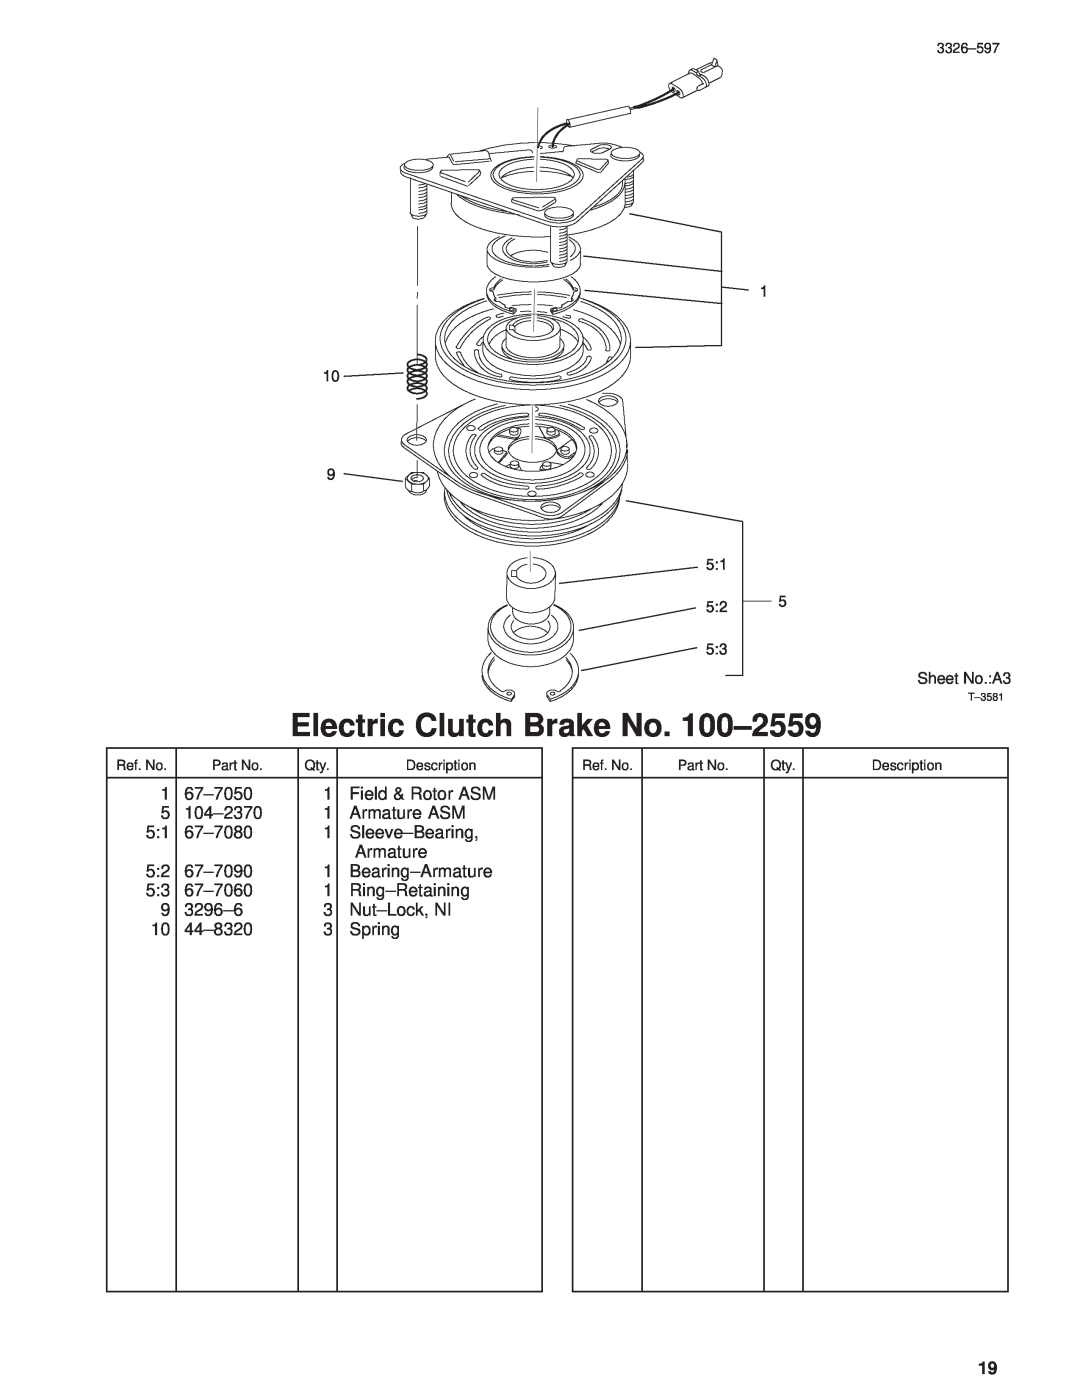 Toro 30402210000001 and Up manual Electric Clutch Brake No. 100±2559, Sheet No.A3 